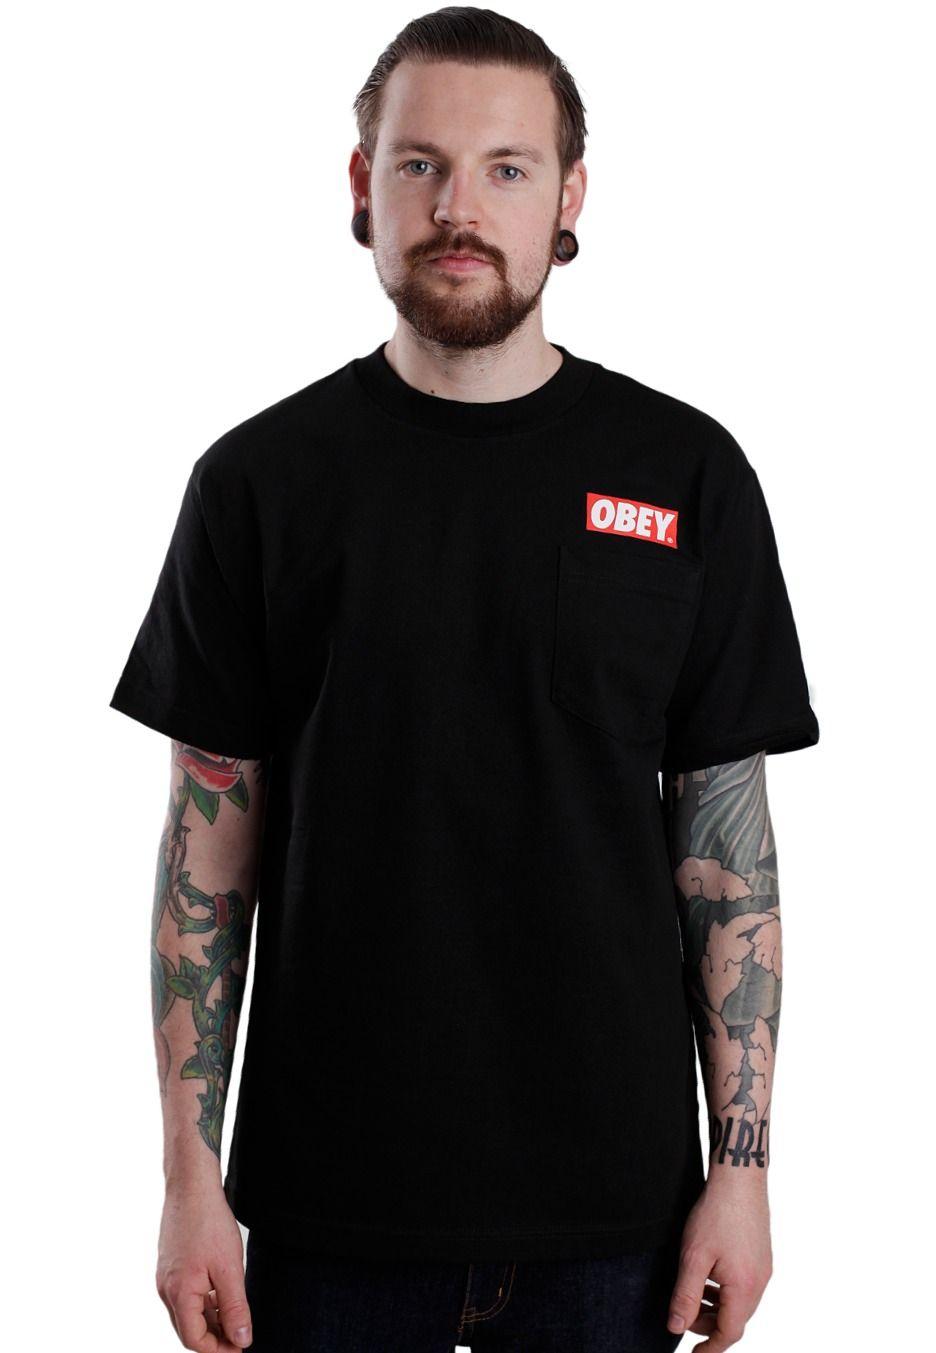 Obey Bar Logo - Obey - Obey Bar Logo - T-Shirt - Streetwear Shop - Impericon.com UK